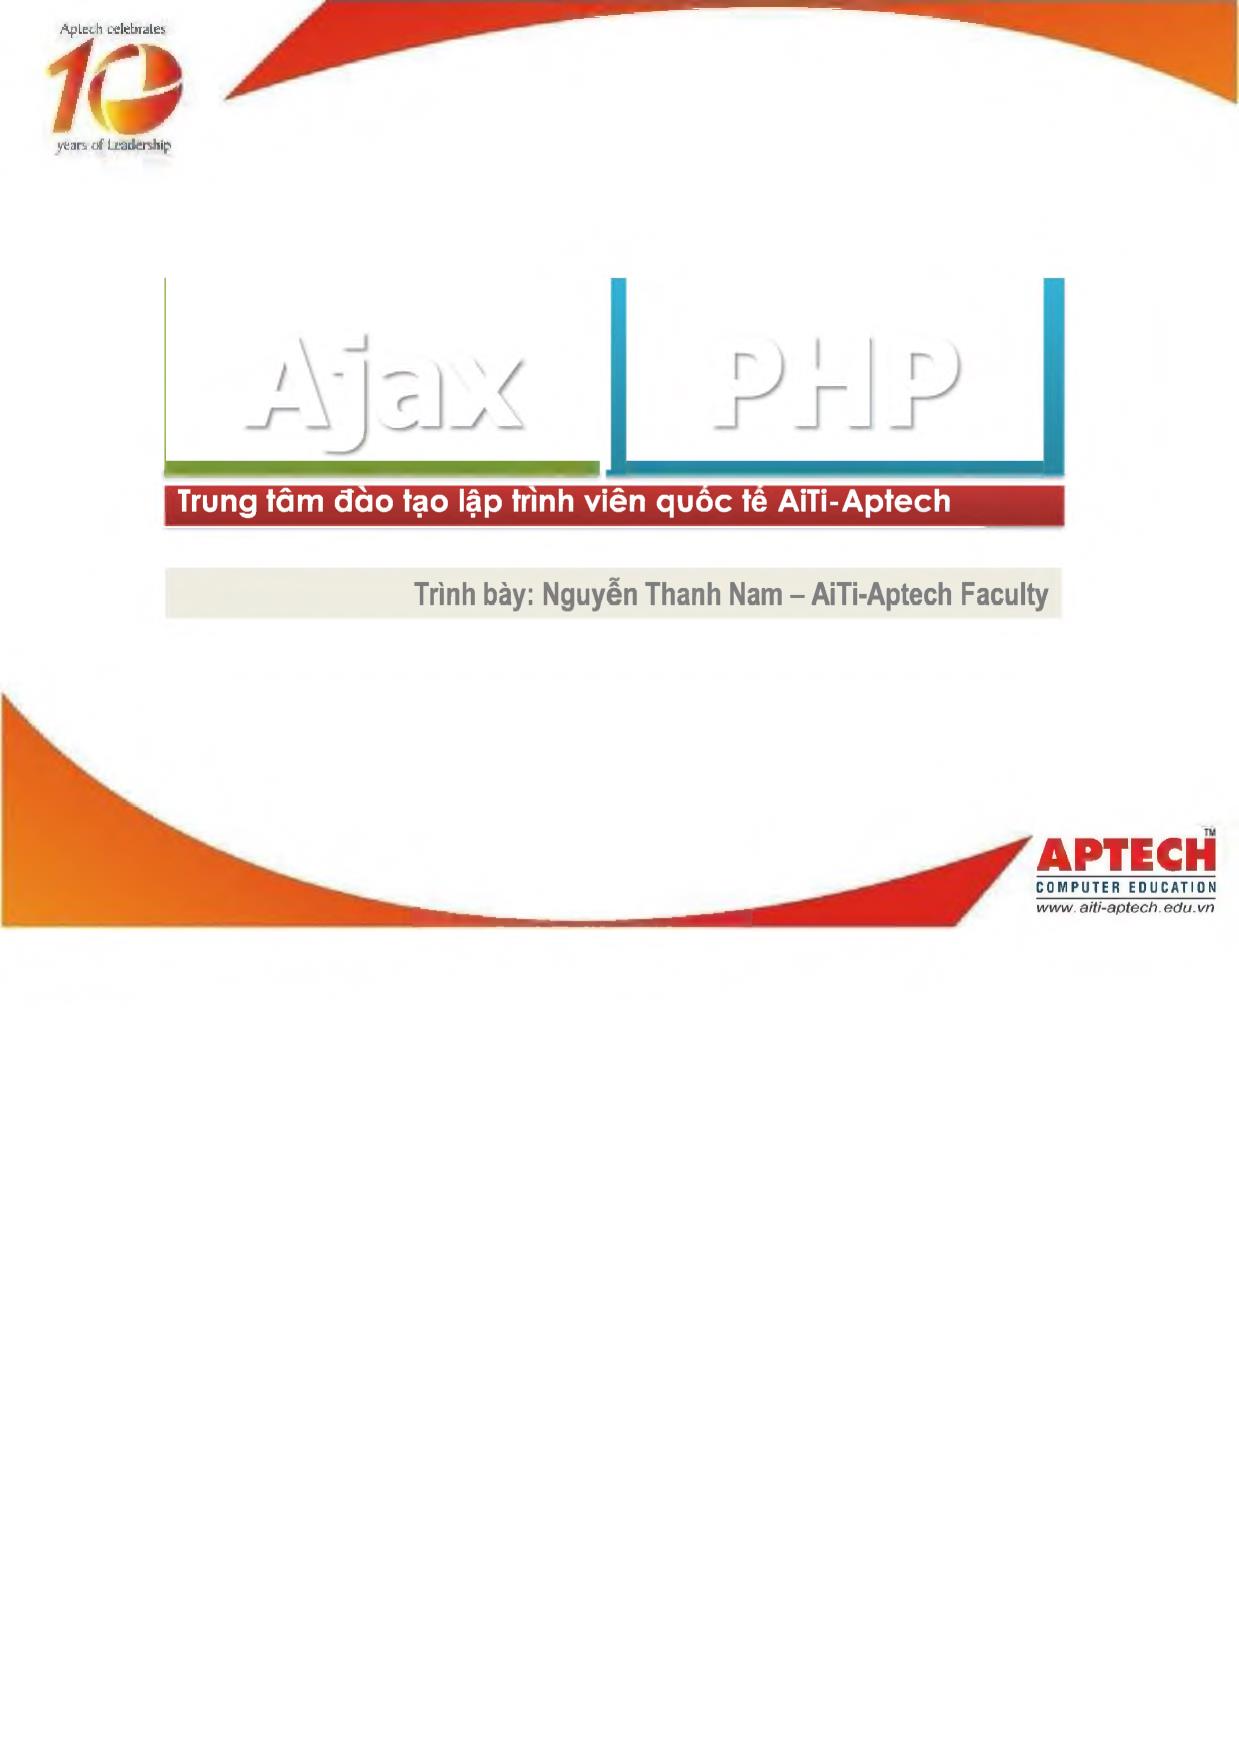 Ajax - PHP trang 1